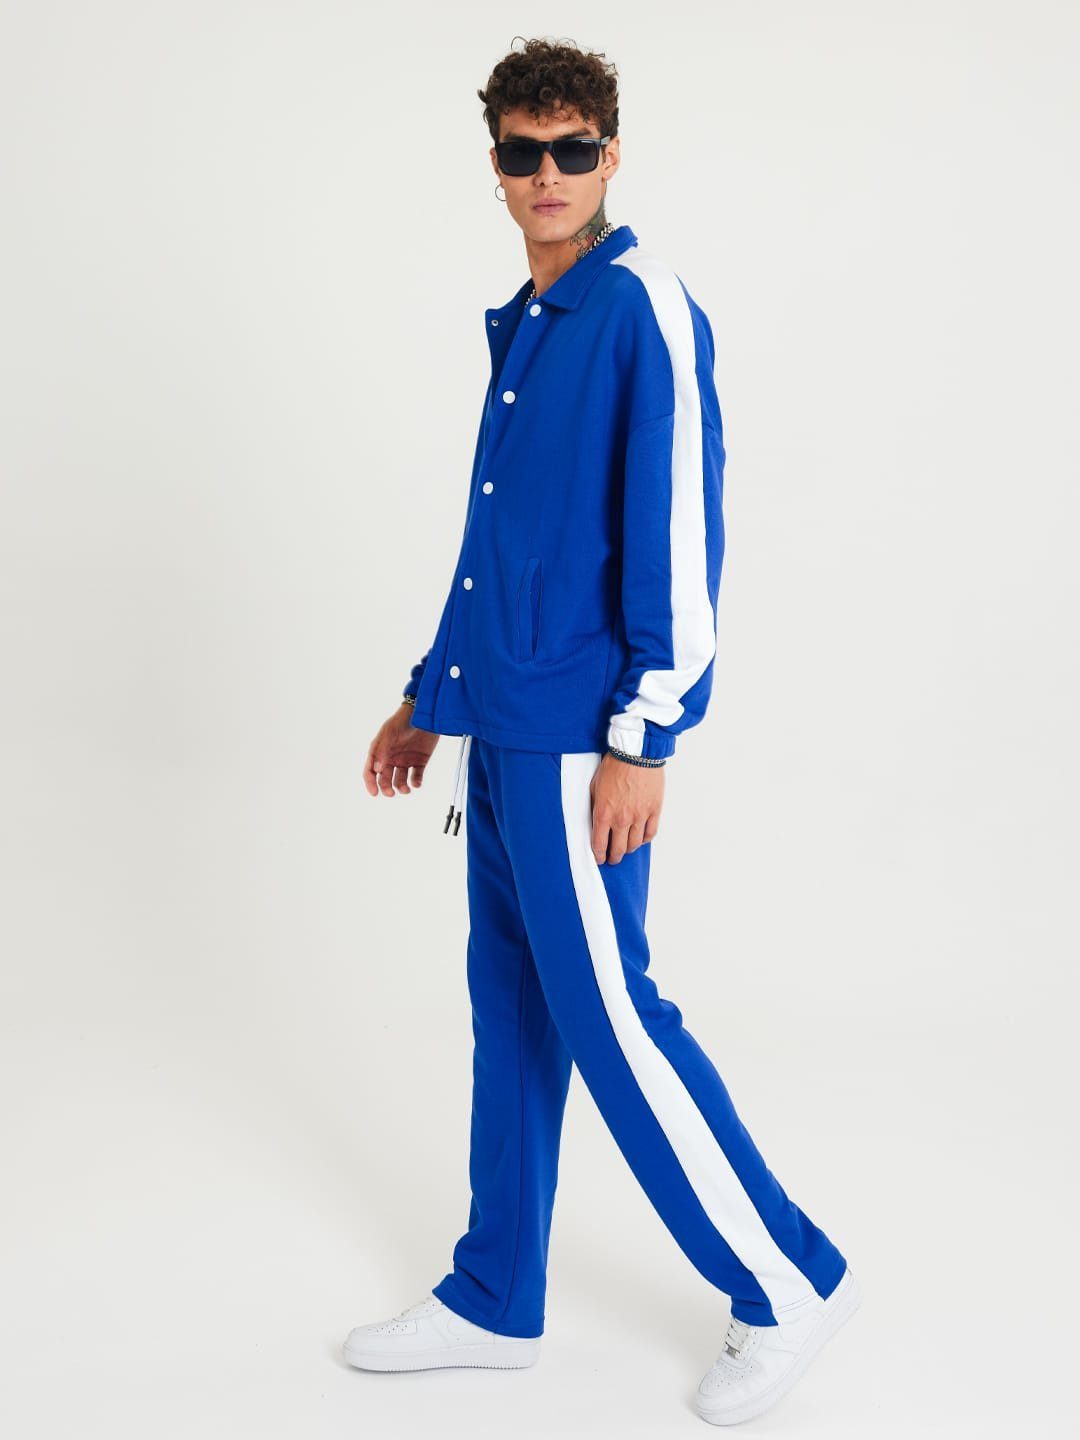 COFI Casuals Jogginganzug Jogger Set Stripe mit Streifen Jacke Hose Jogginganzug Unisex Cotton Blau